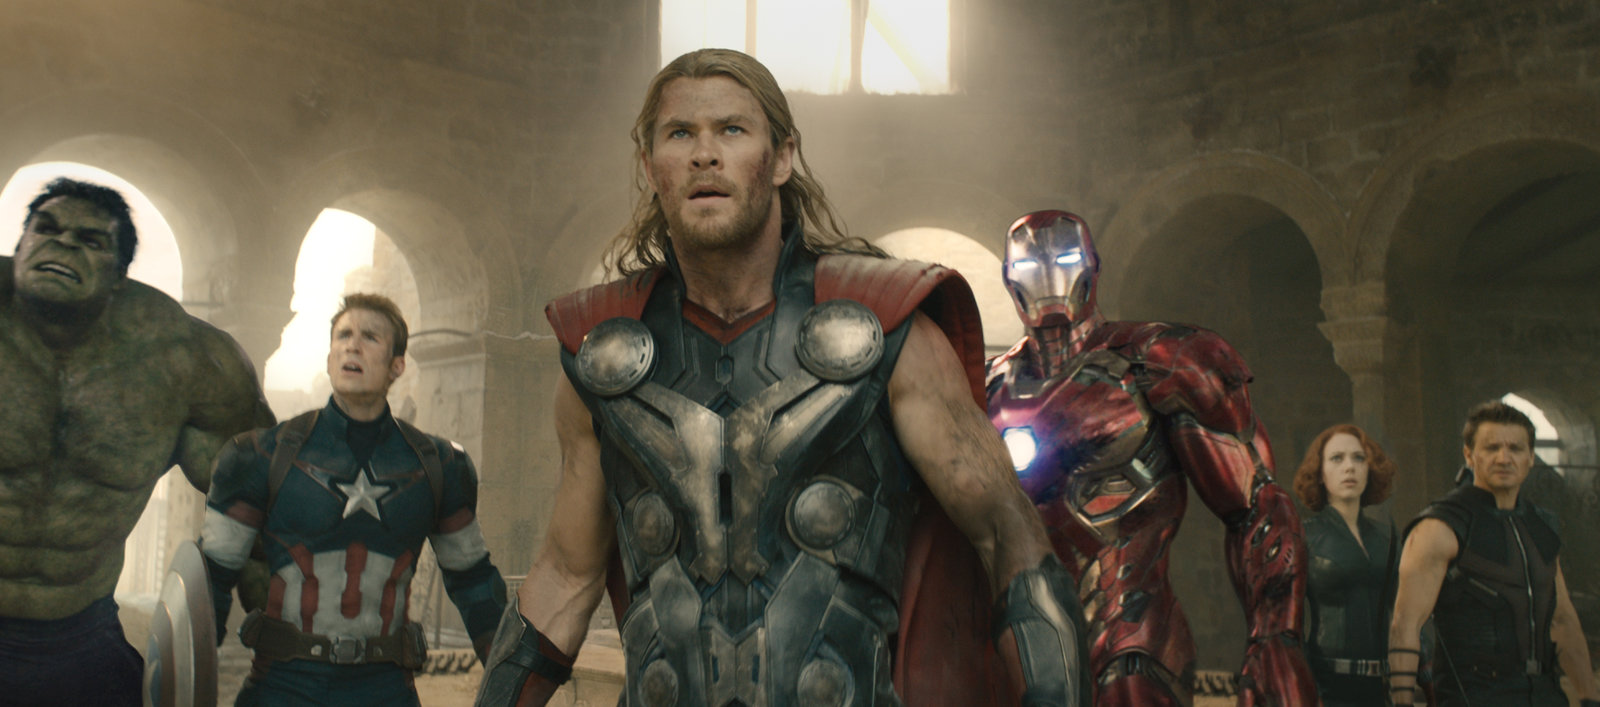 Avengers, The - Age of Ultron (4K Ultra HD)